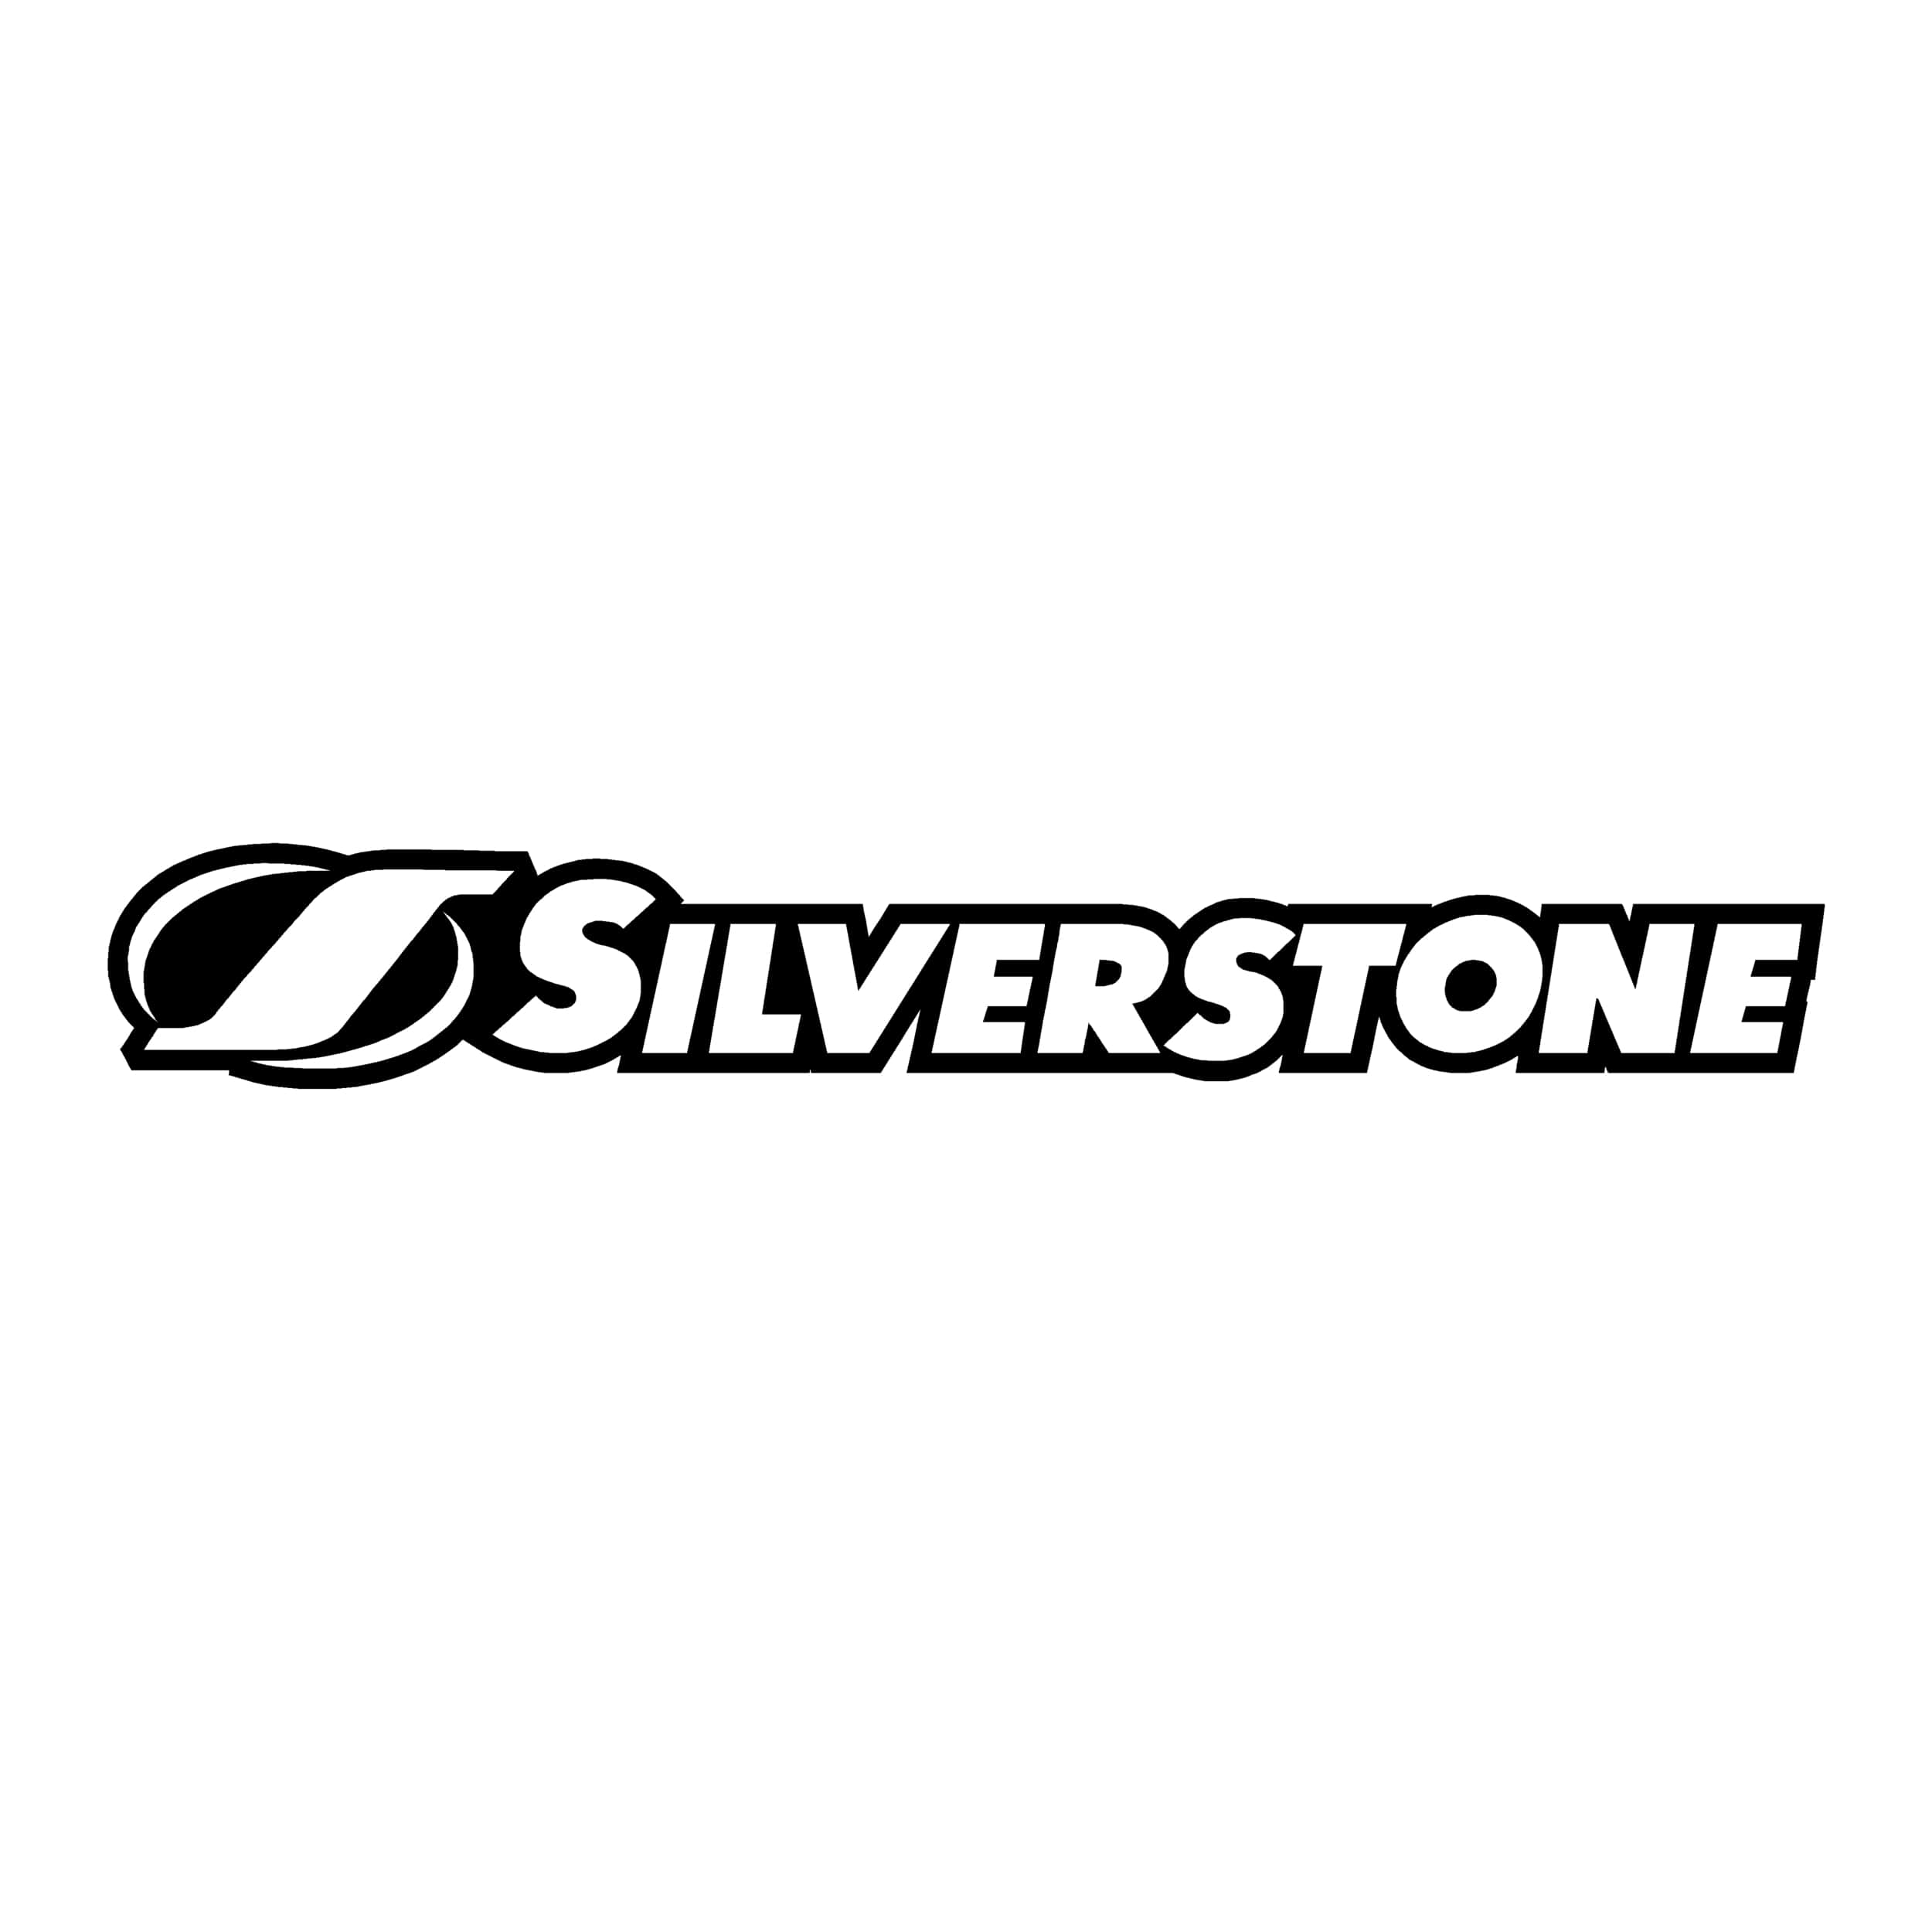 stickers-silverstone-ref-2-tuning-audio-4x4-tout-terrain-car-auto-moto-camion-competition-deco-rallye-autocollant-min